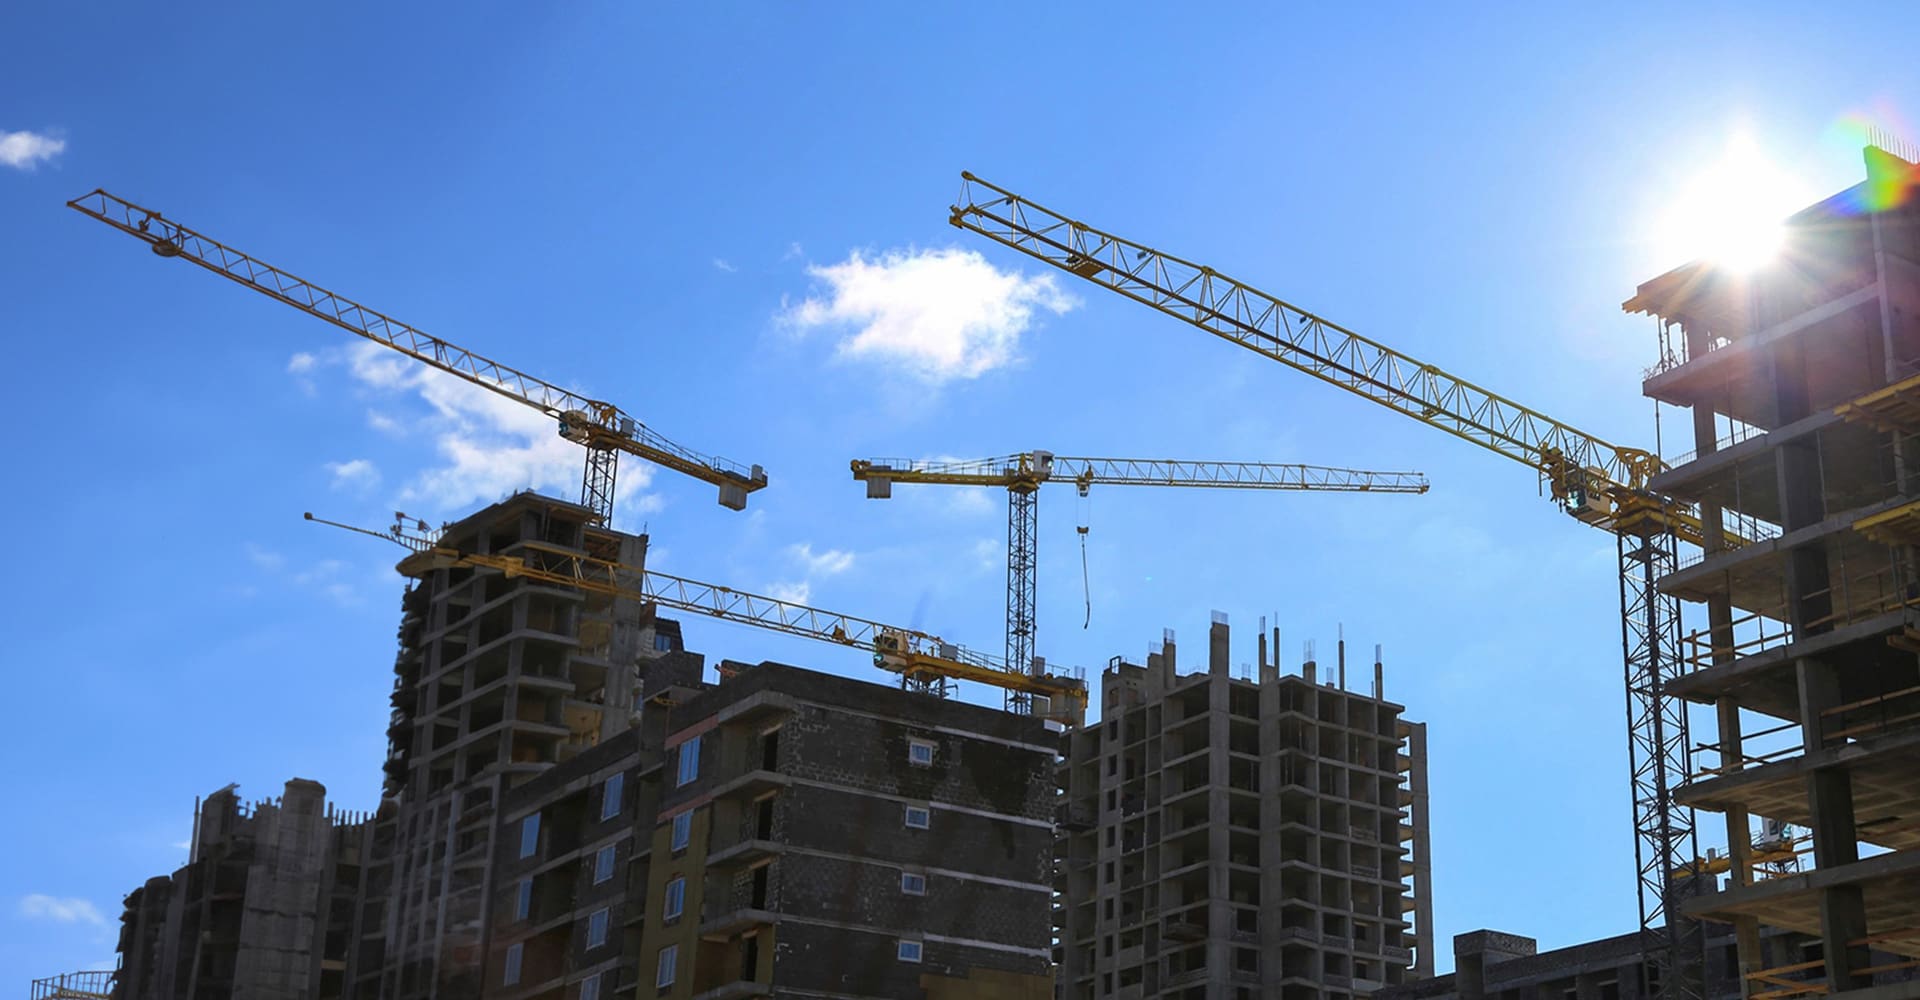 Construction site with cranes against a blue sky.